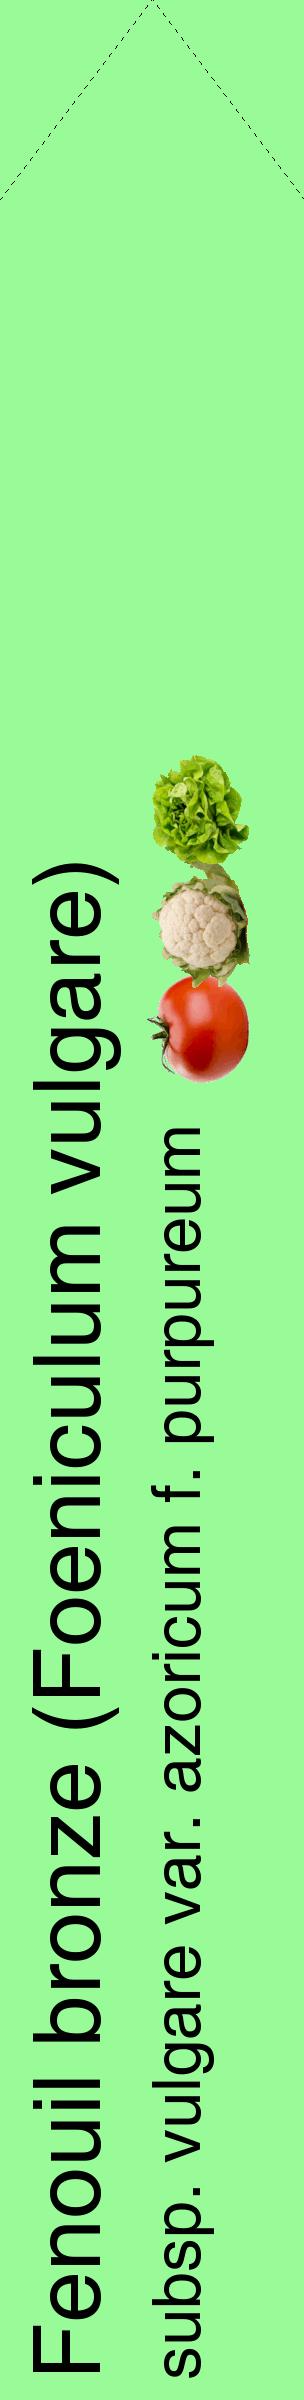 Étiquette de : Foeniculum vulgare subsp. vulgare var. azoricum f. purpureum - format c - style noire14_simplehel avec comestibilité simplifiée